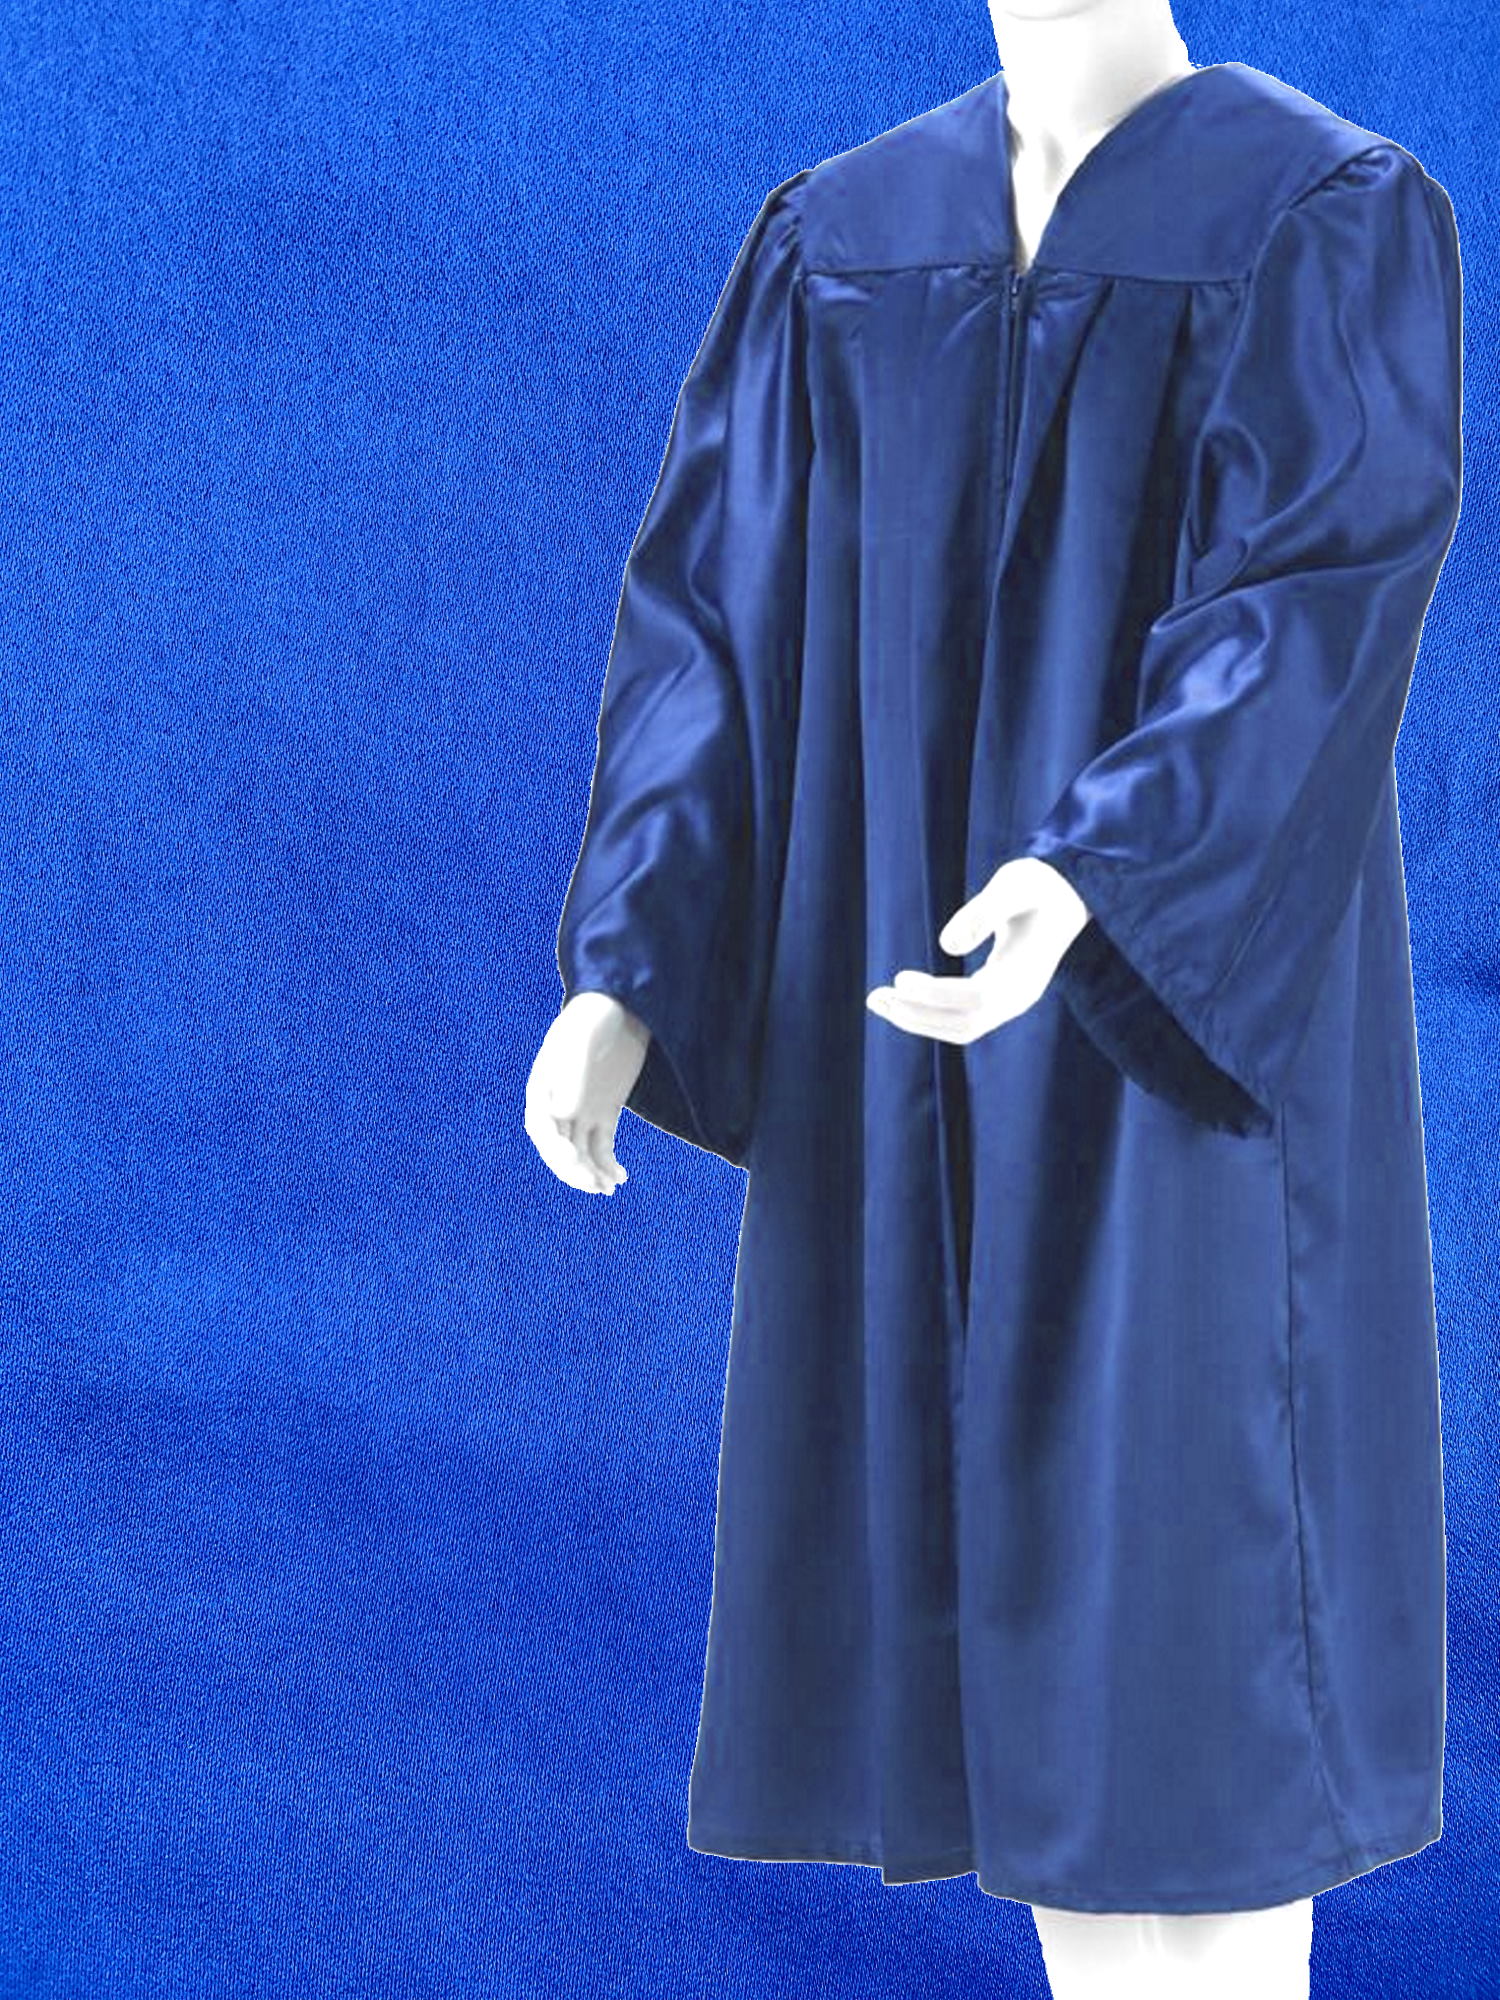 Kokott Robe Royalblau, glänzend, Graduation Gown, Chorrobe